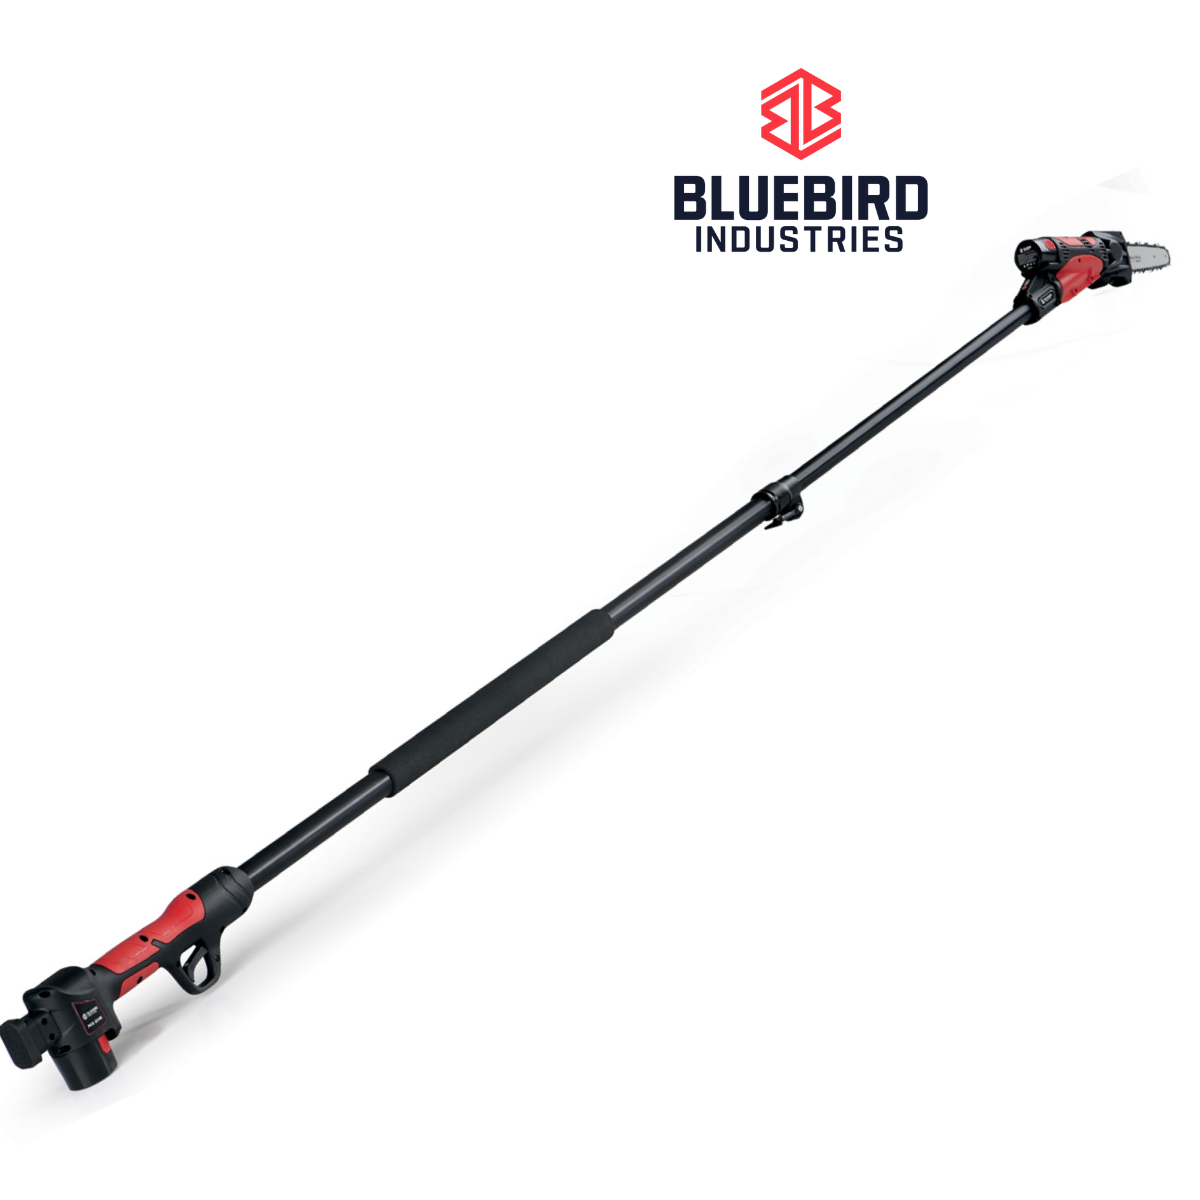 Bluebird PCS 22-10 Pole Chain Pruner 21V